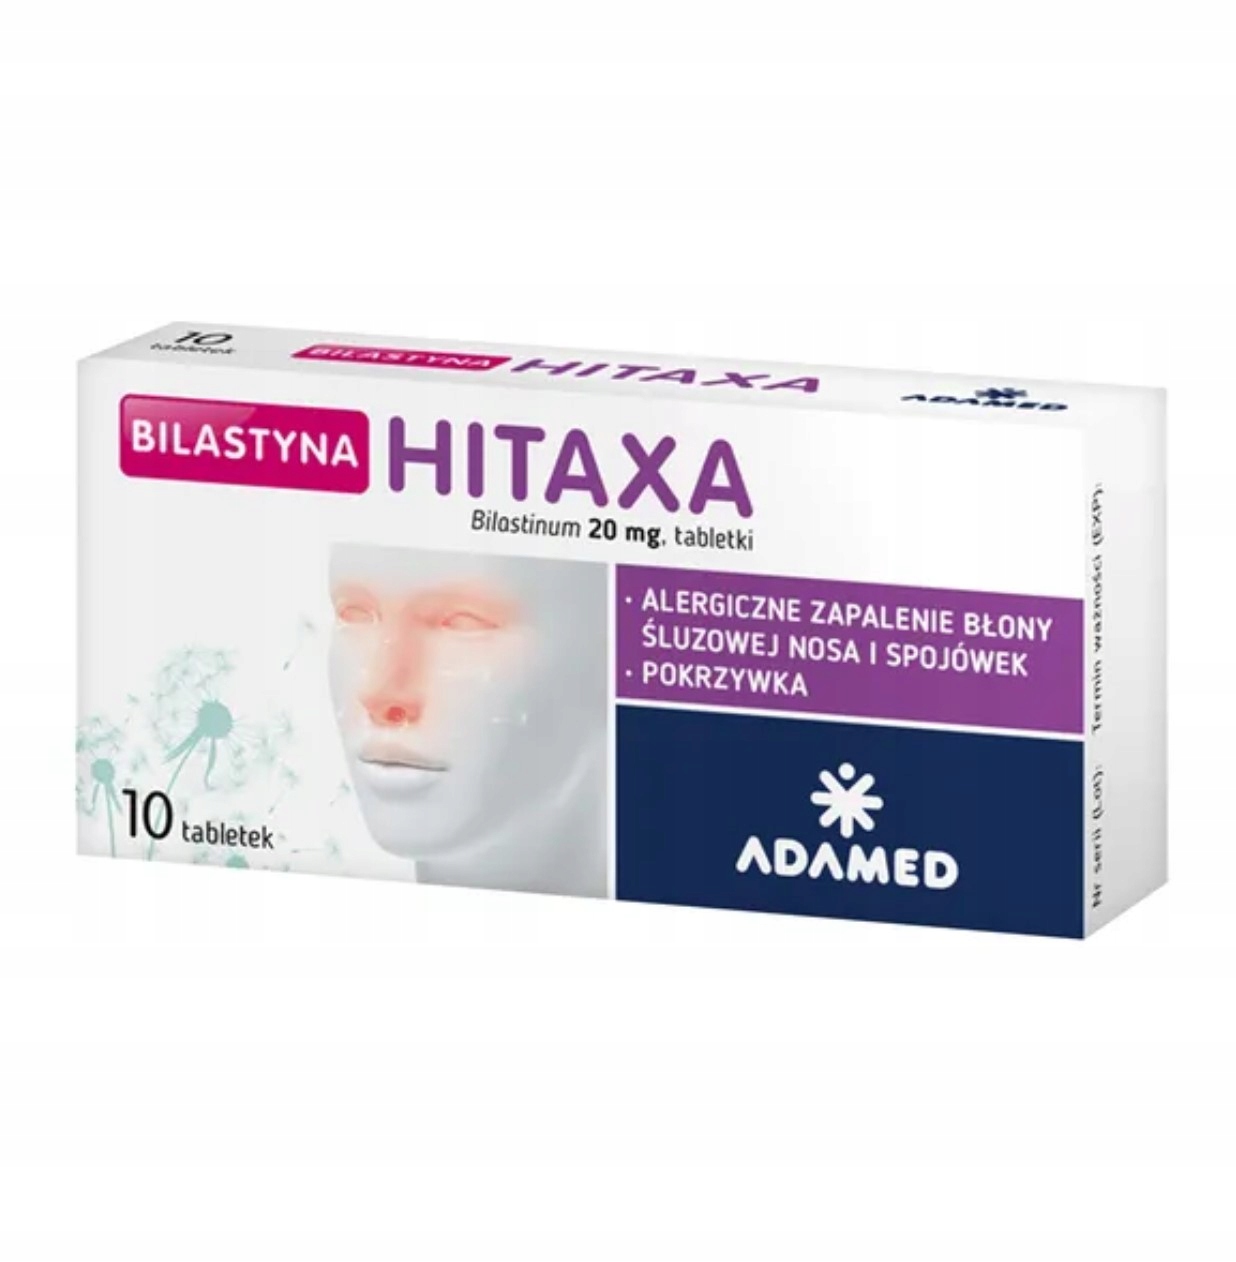 БИЛАСТИНА Хитакса 20 мг лек на катарсисе 10 таблеток